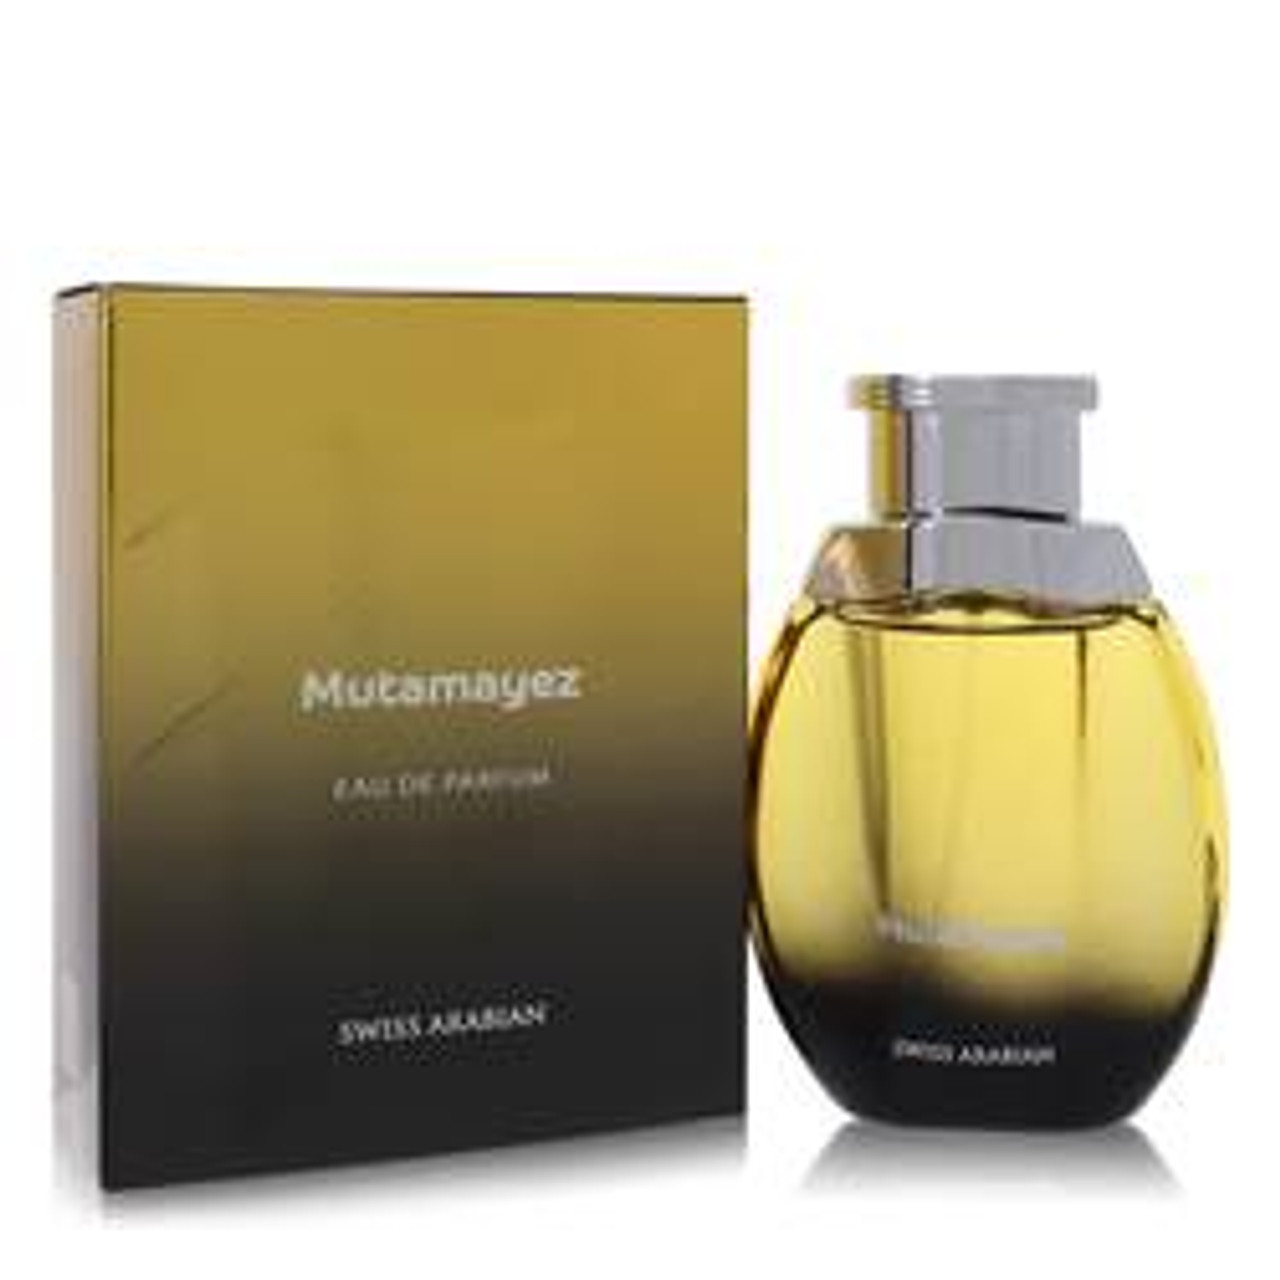 Mutamayez Cologne By Swiss Arabian Eau De Parfum Spray (Unisex) 3.4 oz for Men - [From 96.00 - Choose pk Qty ] - *Ships from Miami